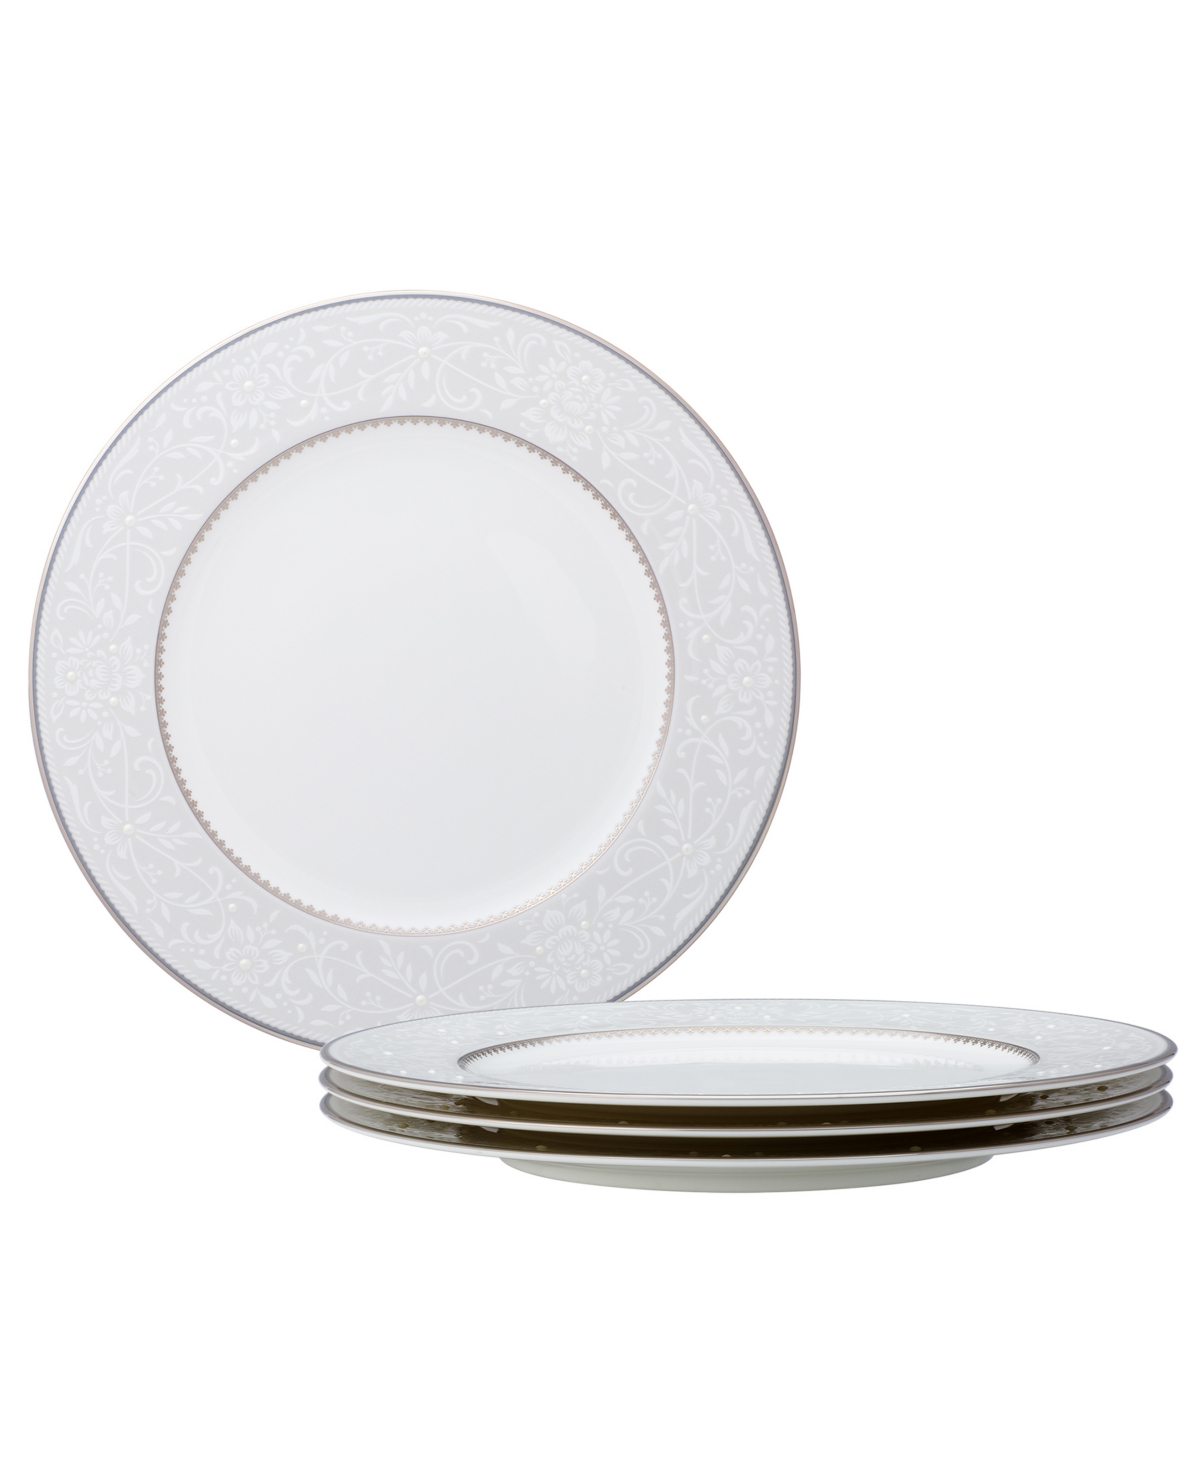 Noritake Brocato Set Of 4 Dinner Plates, Service For 4 In Gray